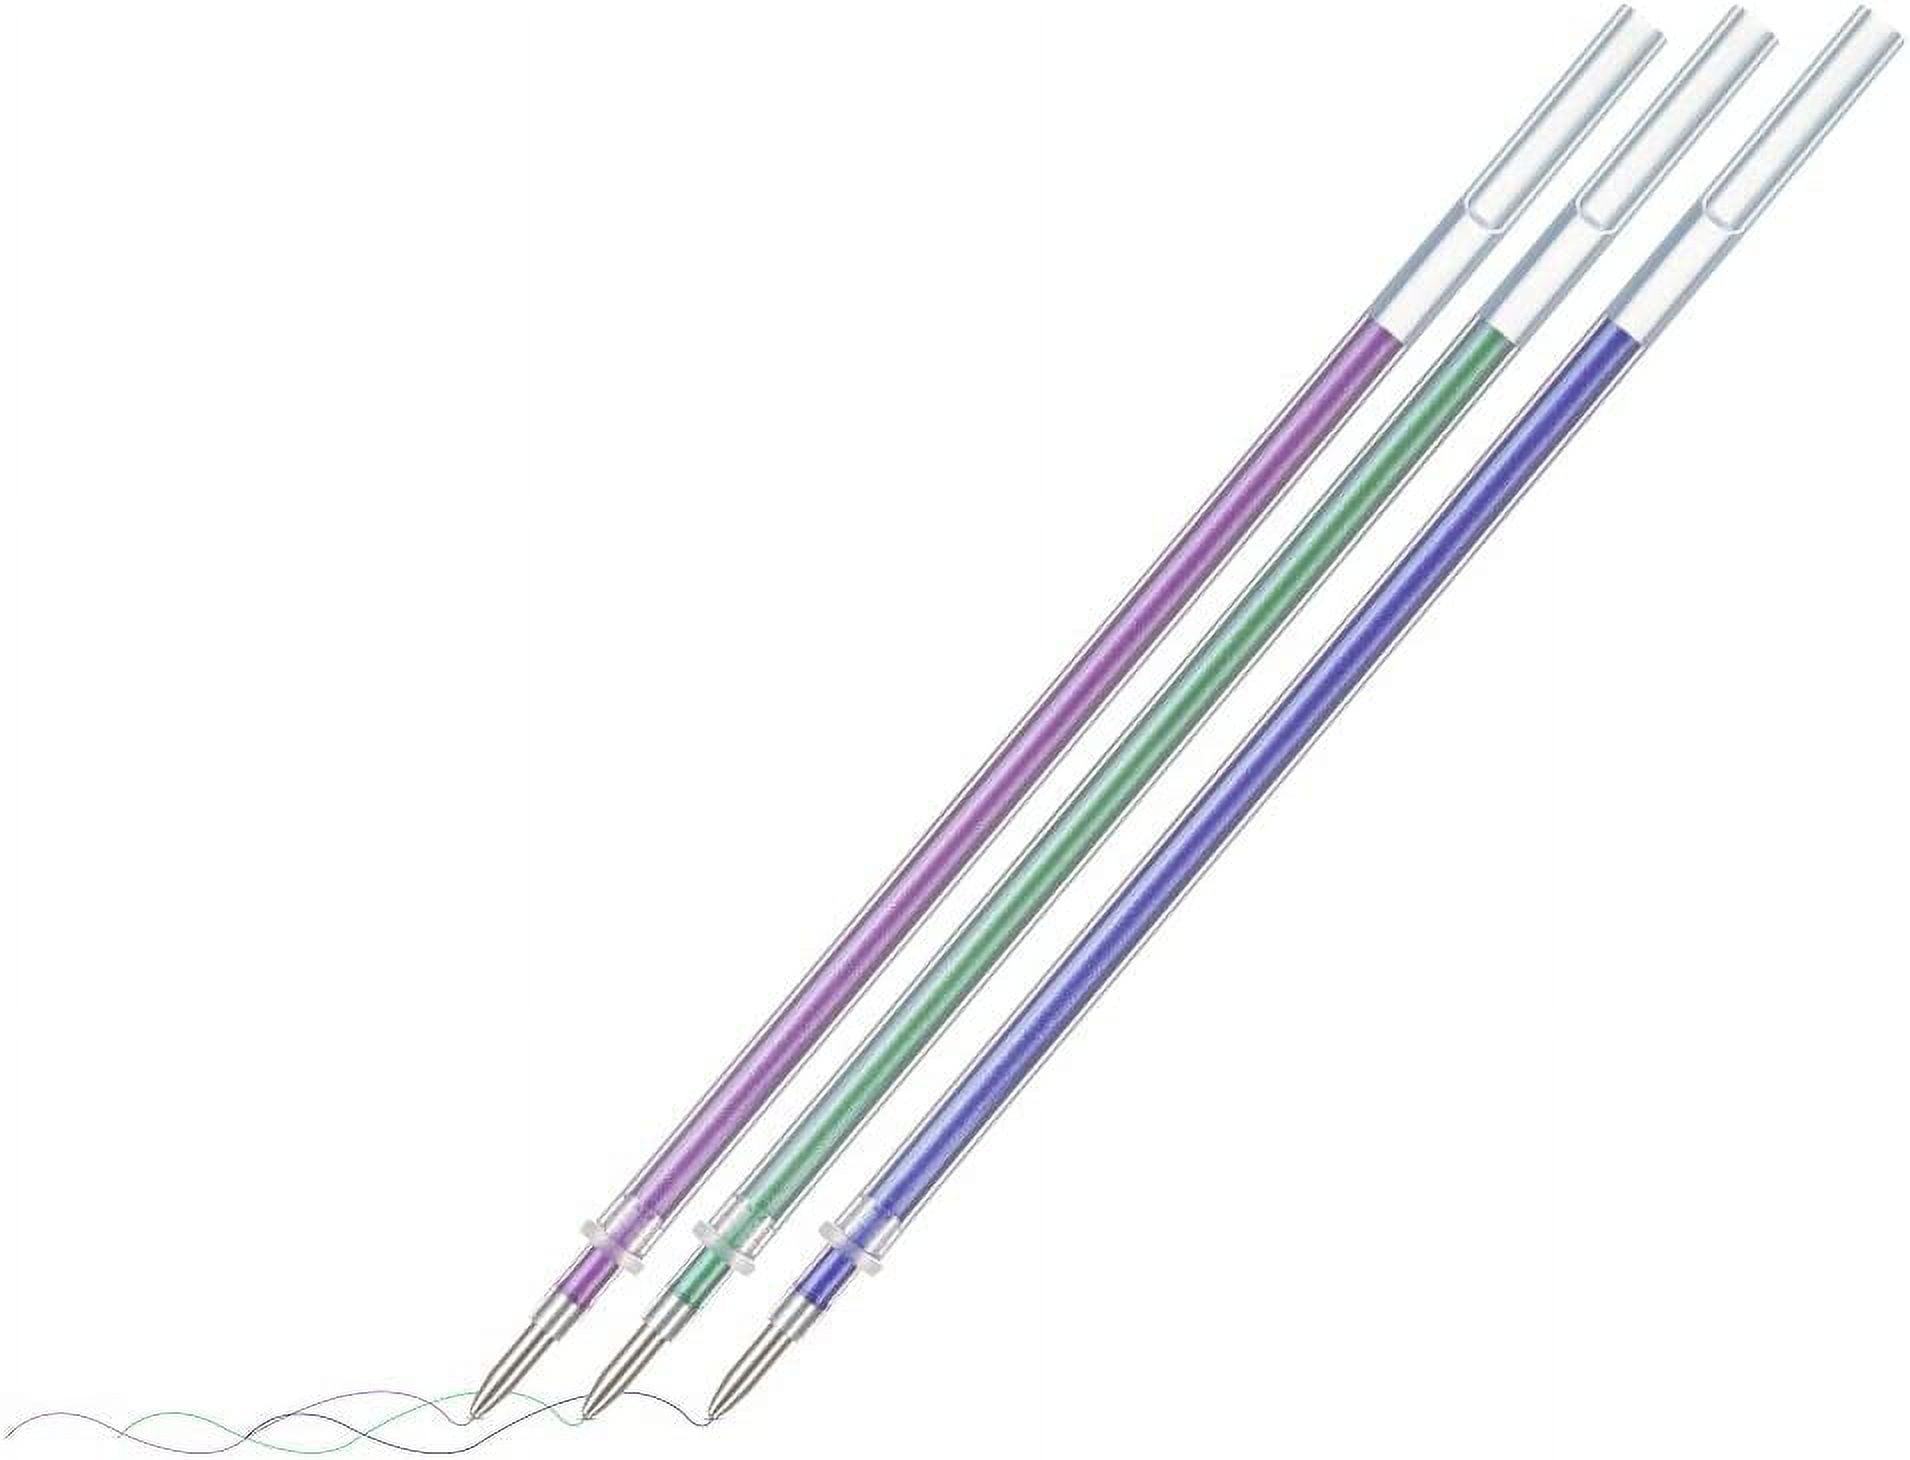 .com : Posh + Pop Set of 60 Gel Pens: Glitter, Neon